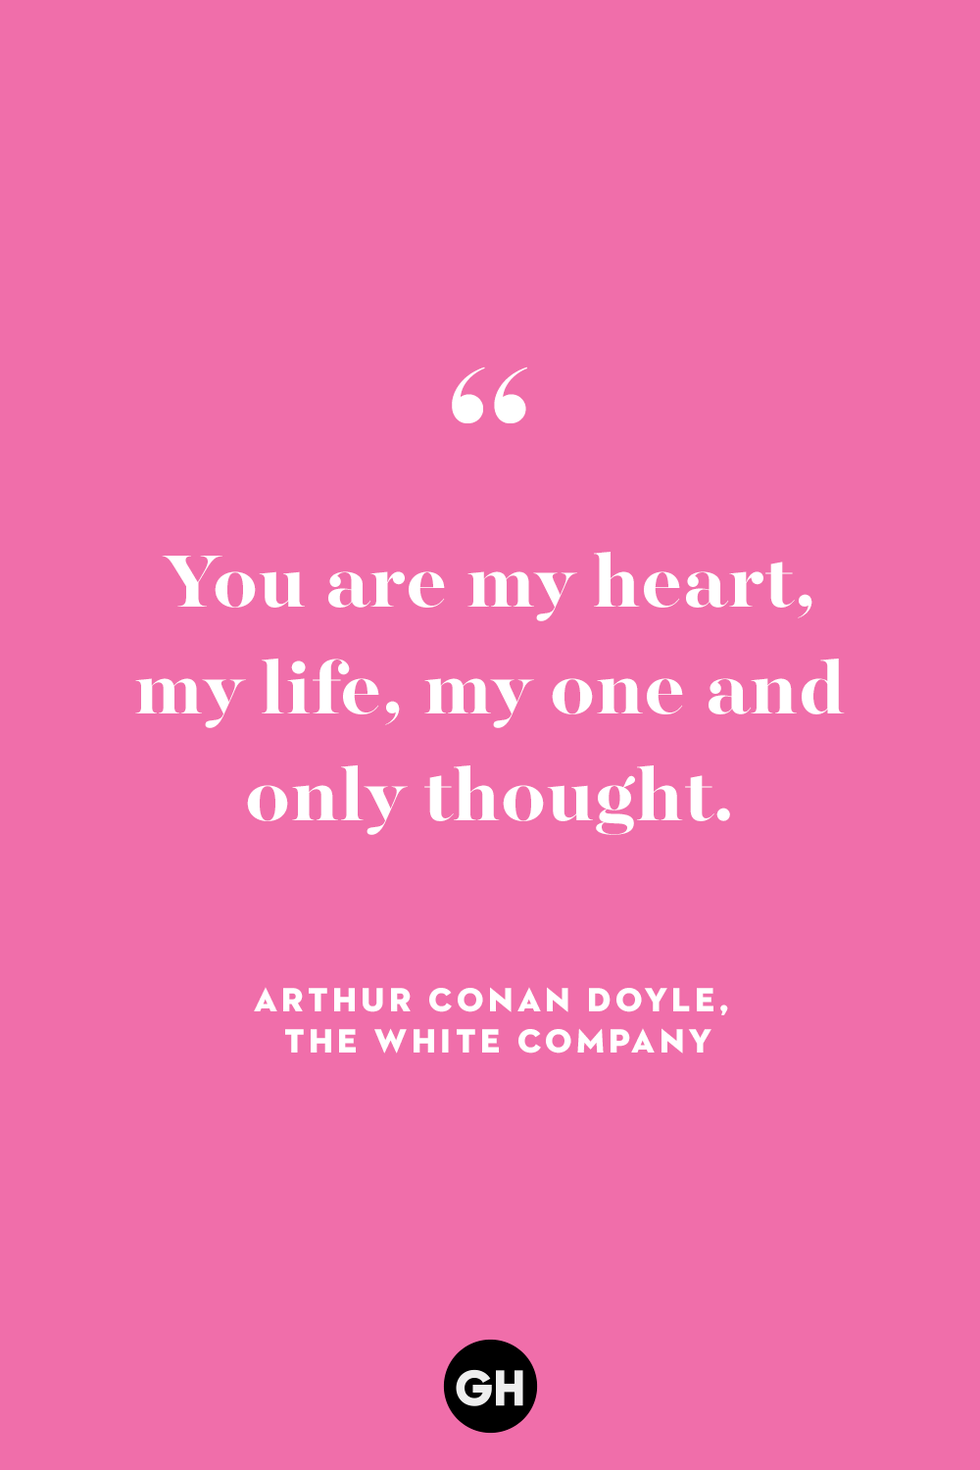 40 Romantic Love Quotes for Him